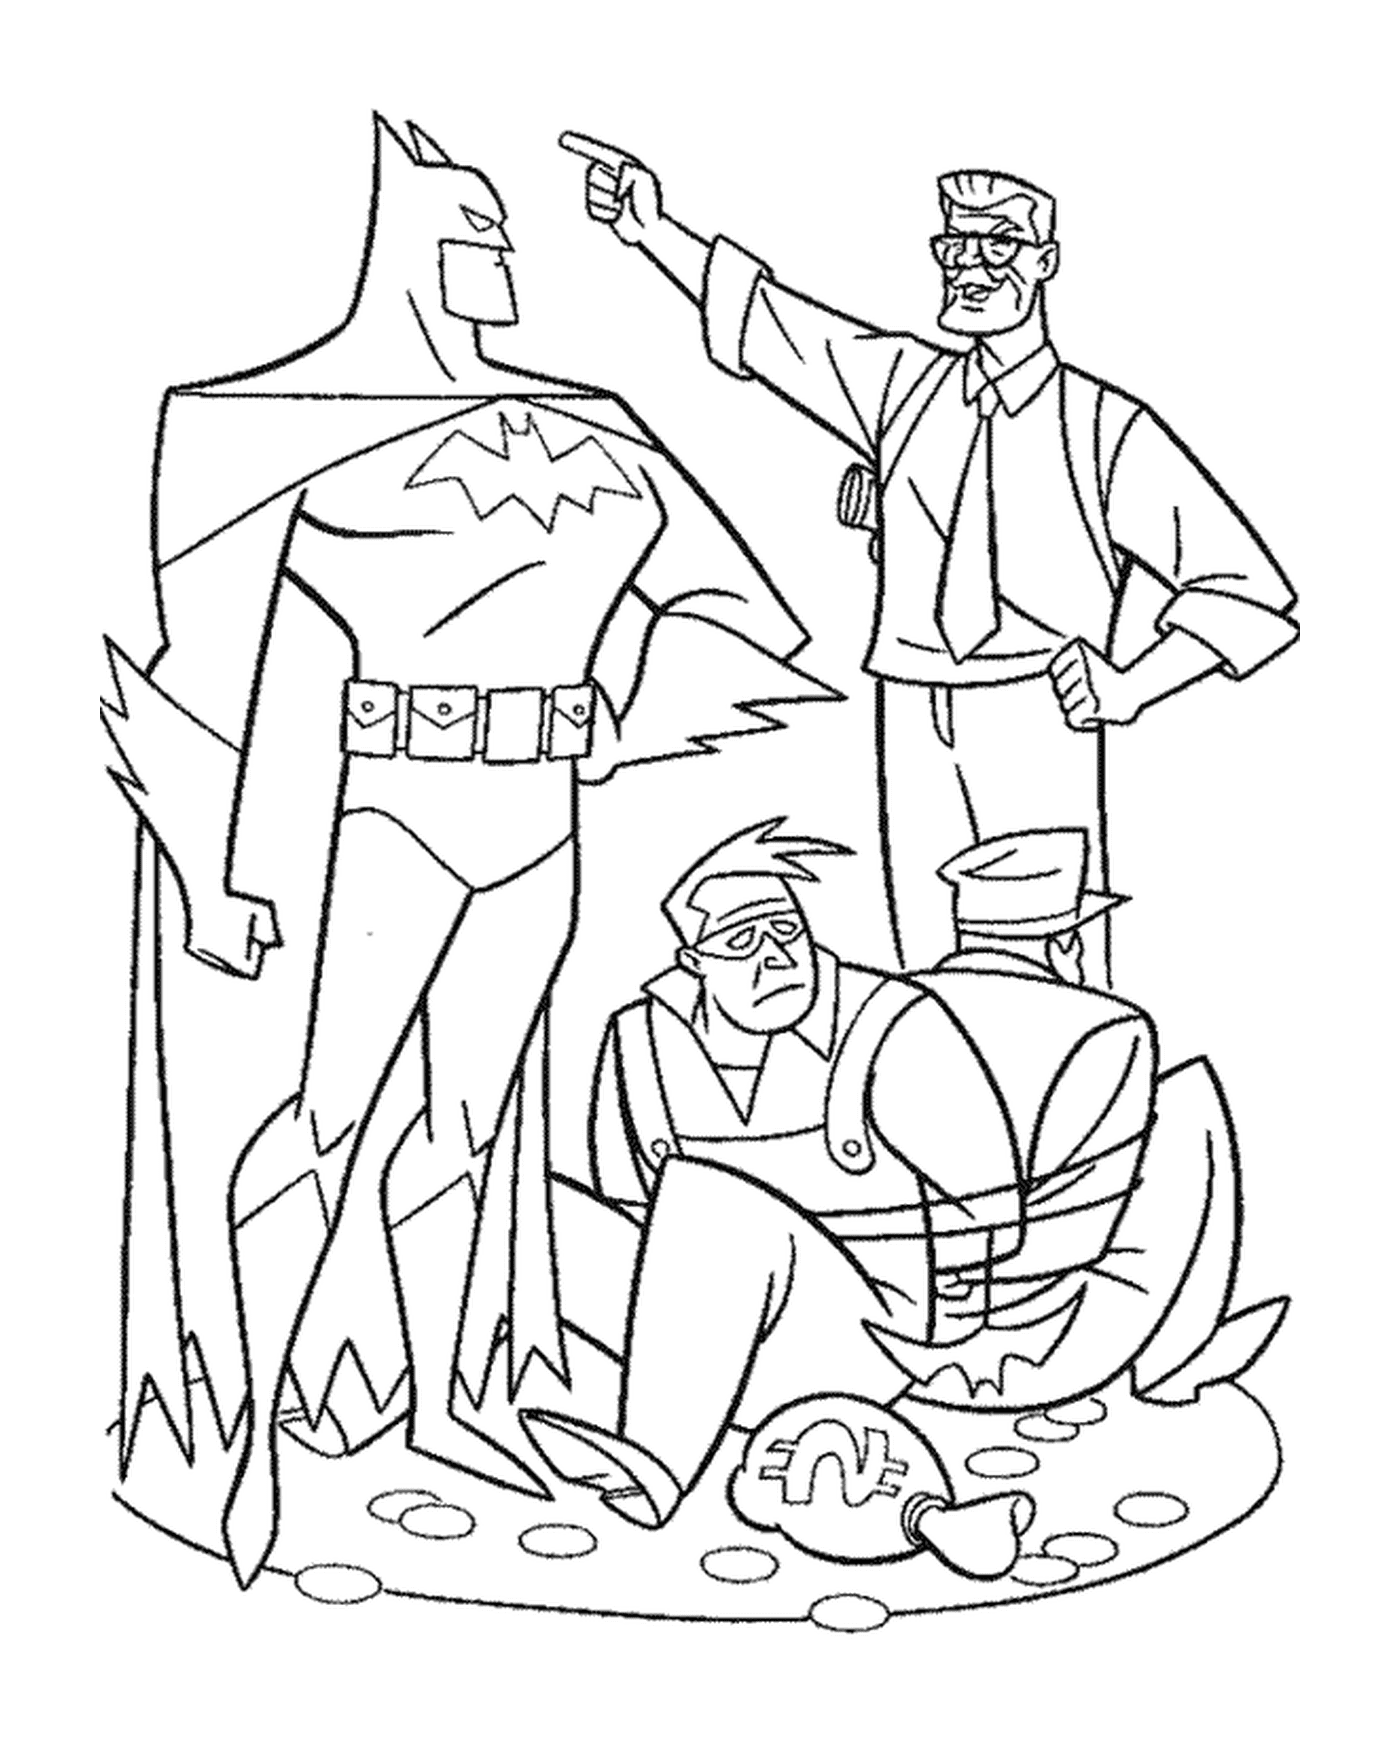  Batman's arresting thieves 